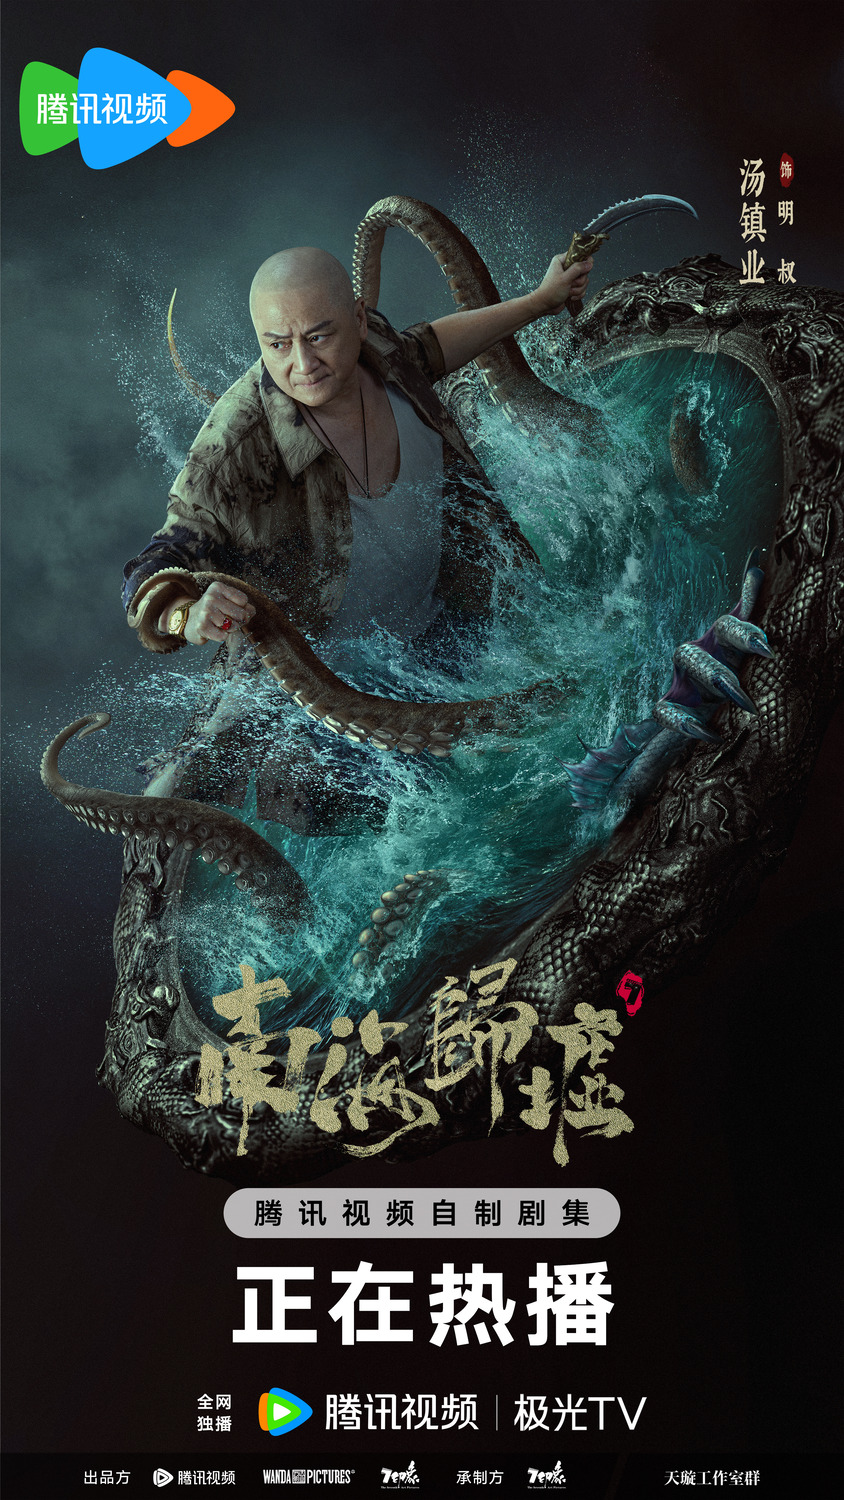 Extra Large TV Poster Image for Nan hai gui xu (#6 of 6)